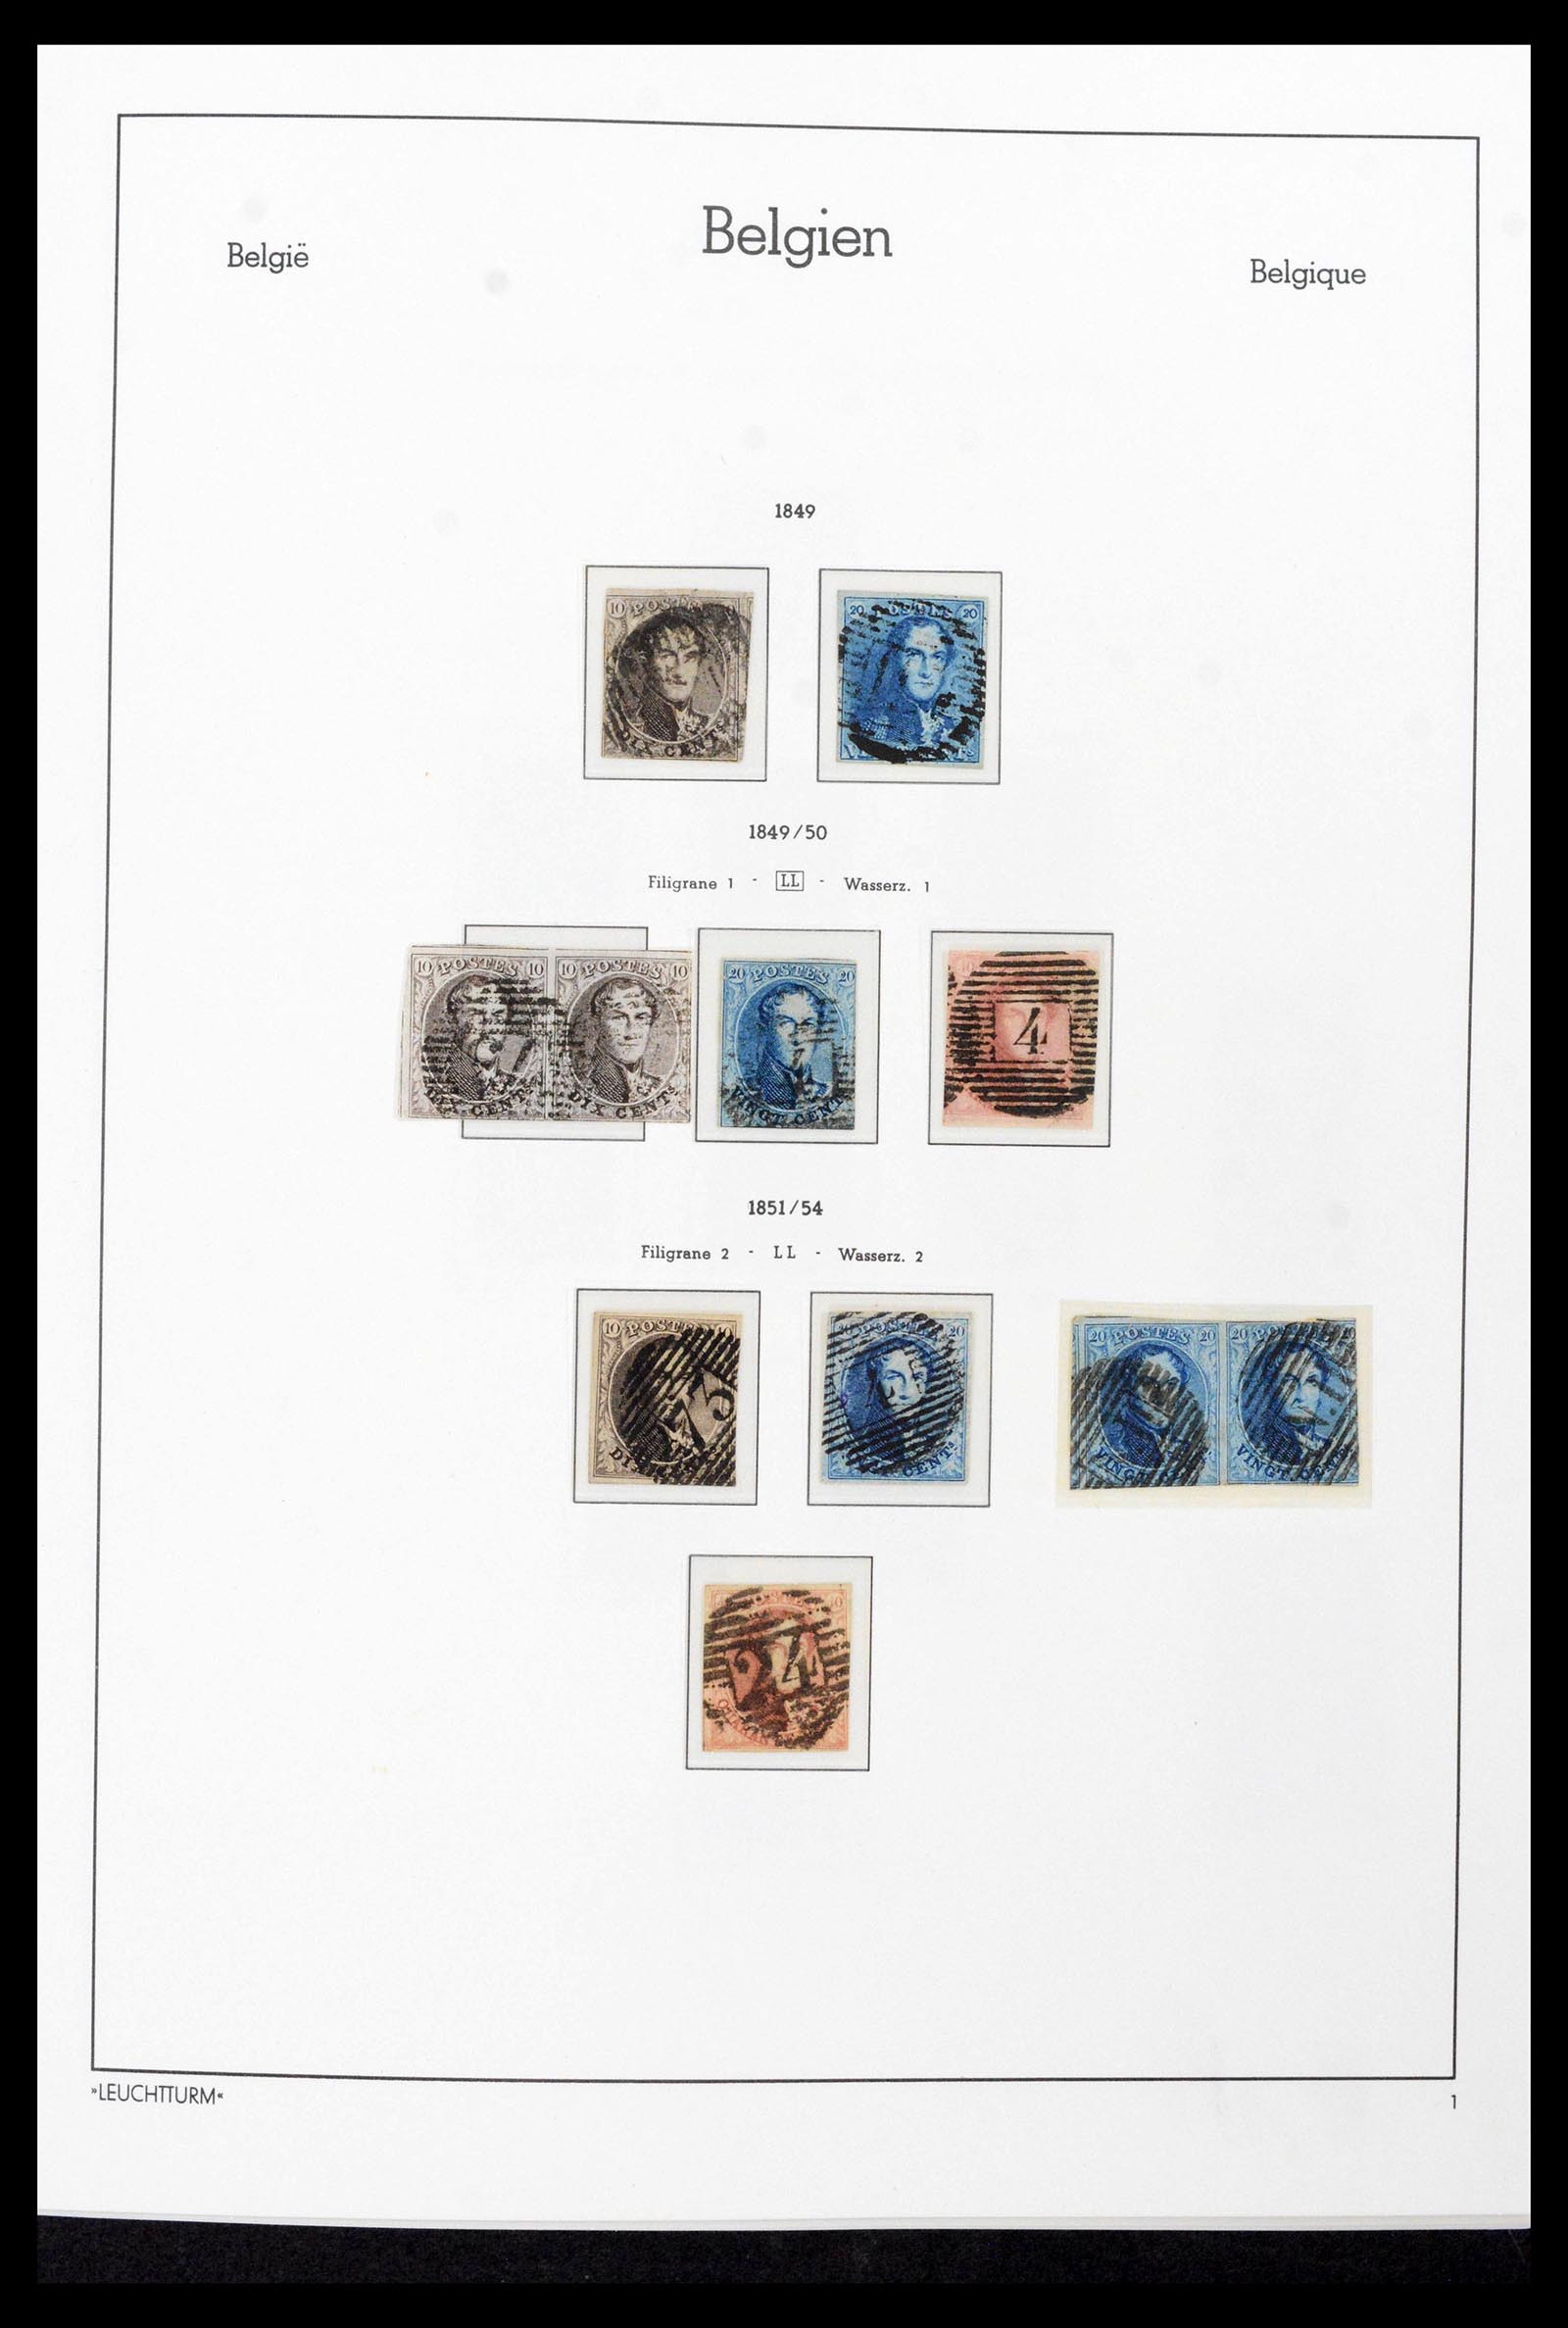 39137 0001 - Stamp collection 39137 Belgium 1849-2002.